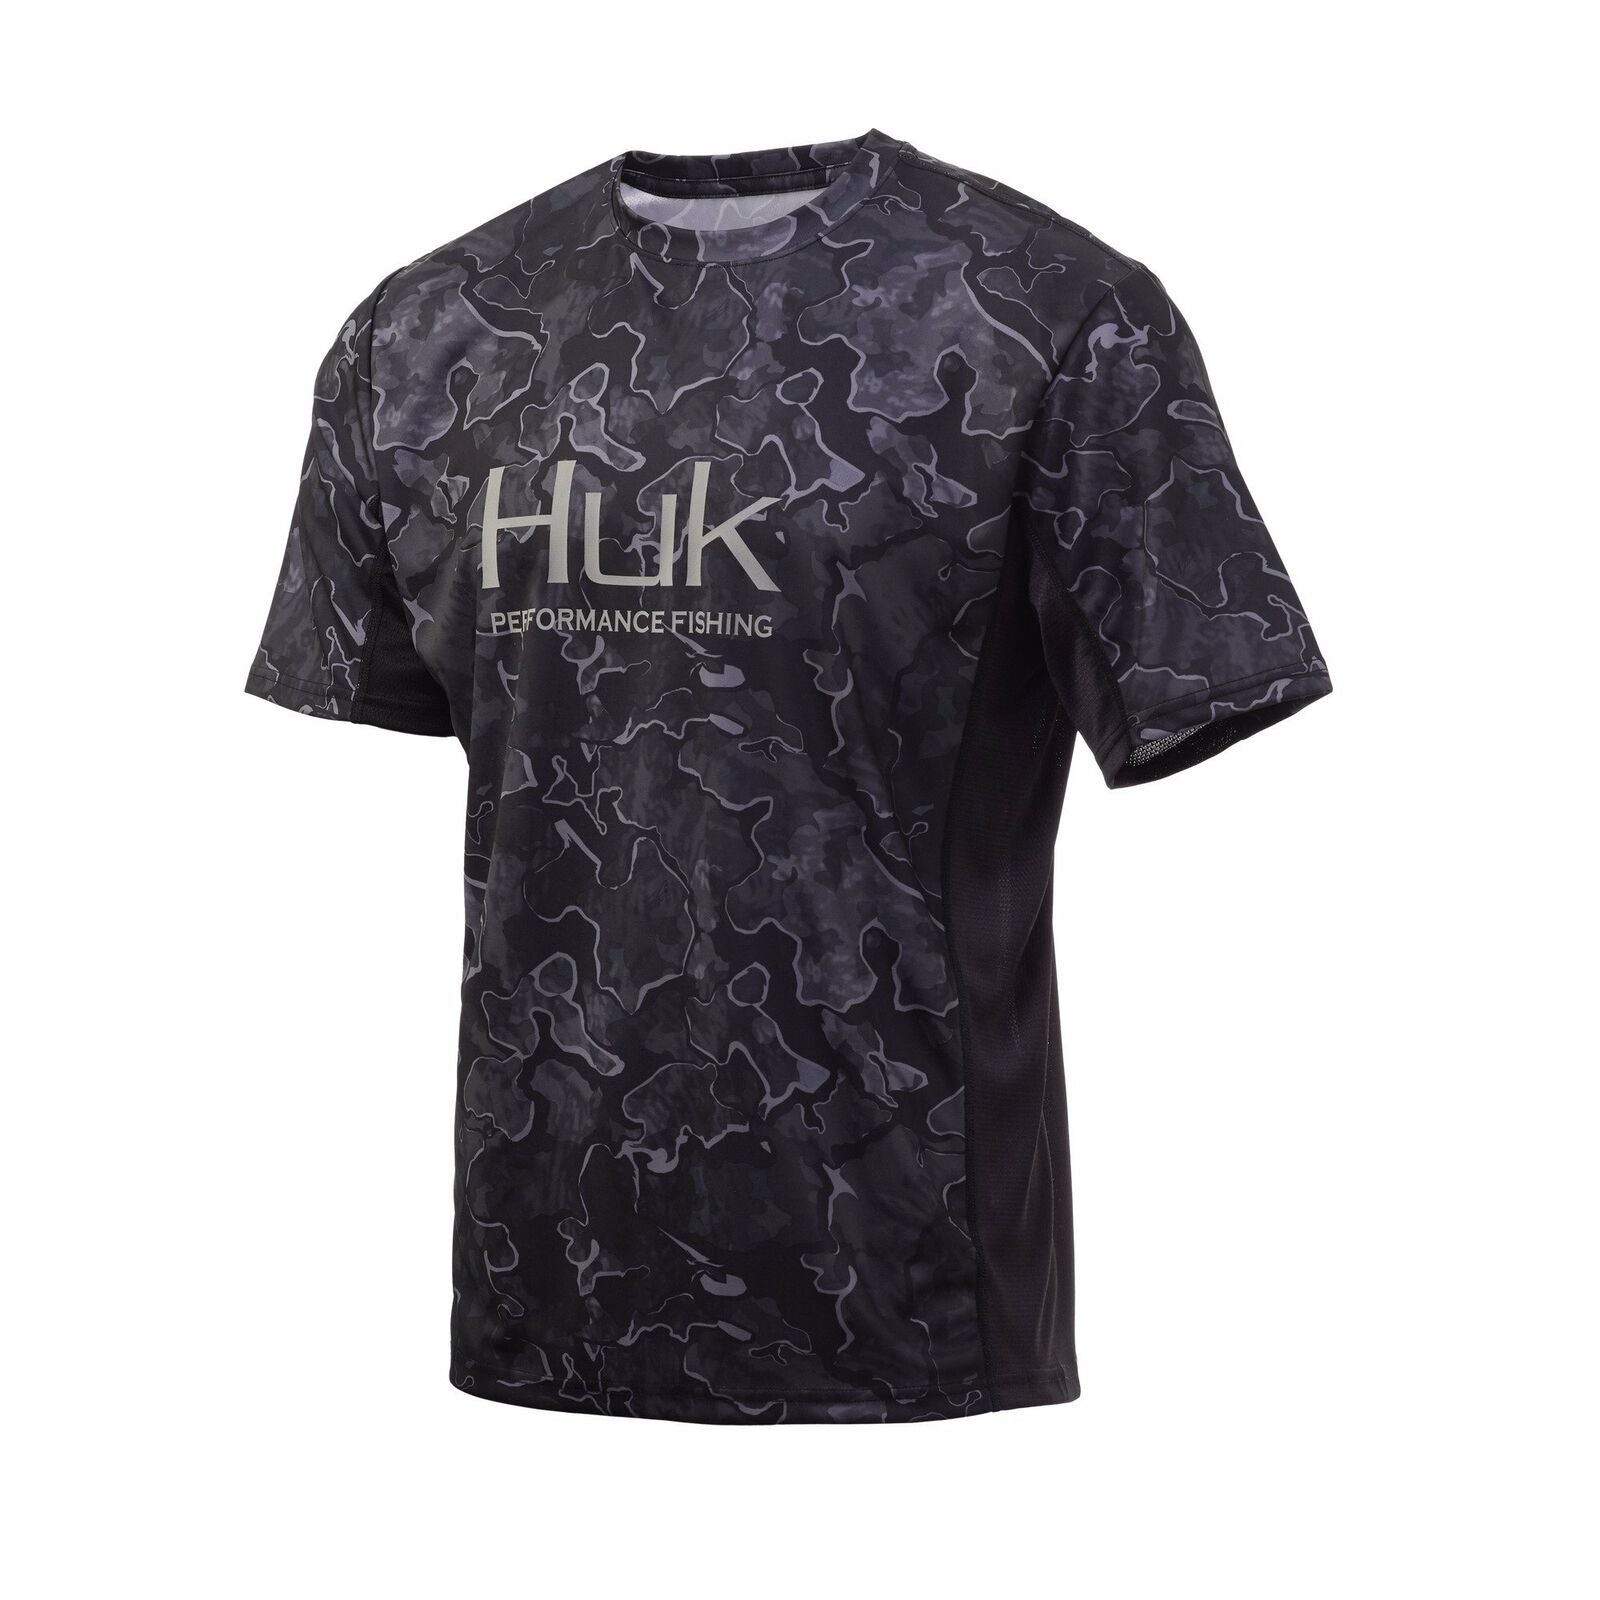 Huk, Tops, Huk Womens Icon X Camo Long Sleeve Performance Fishing Shirt  Small